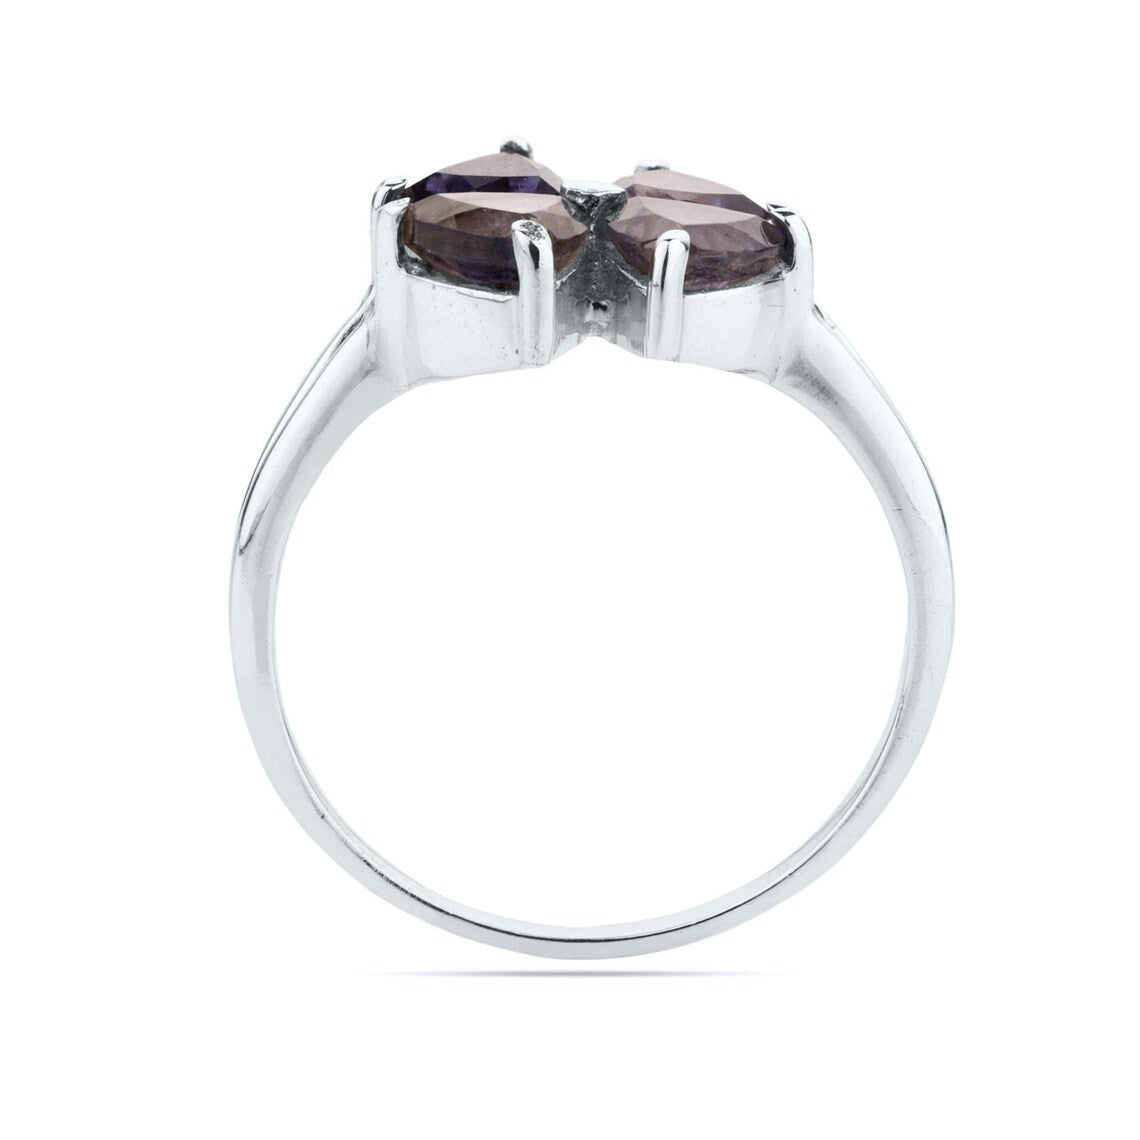 iolite 925 sterling silver ring, gemstone ring, trillion iolite ring, faceted iolite ring, birthstone silver ring